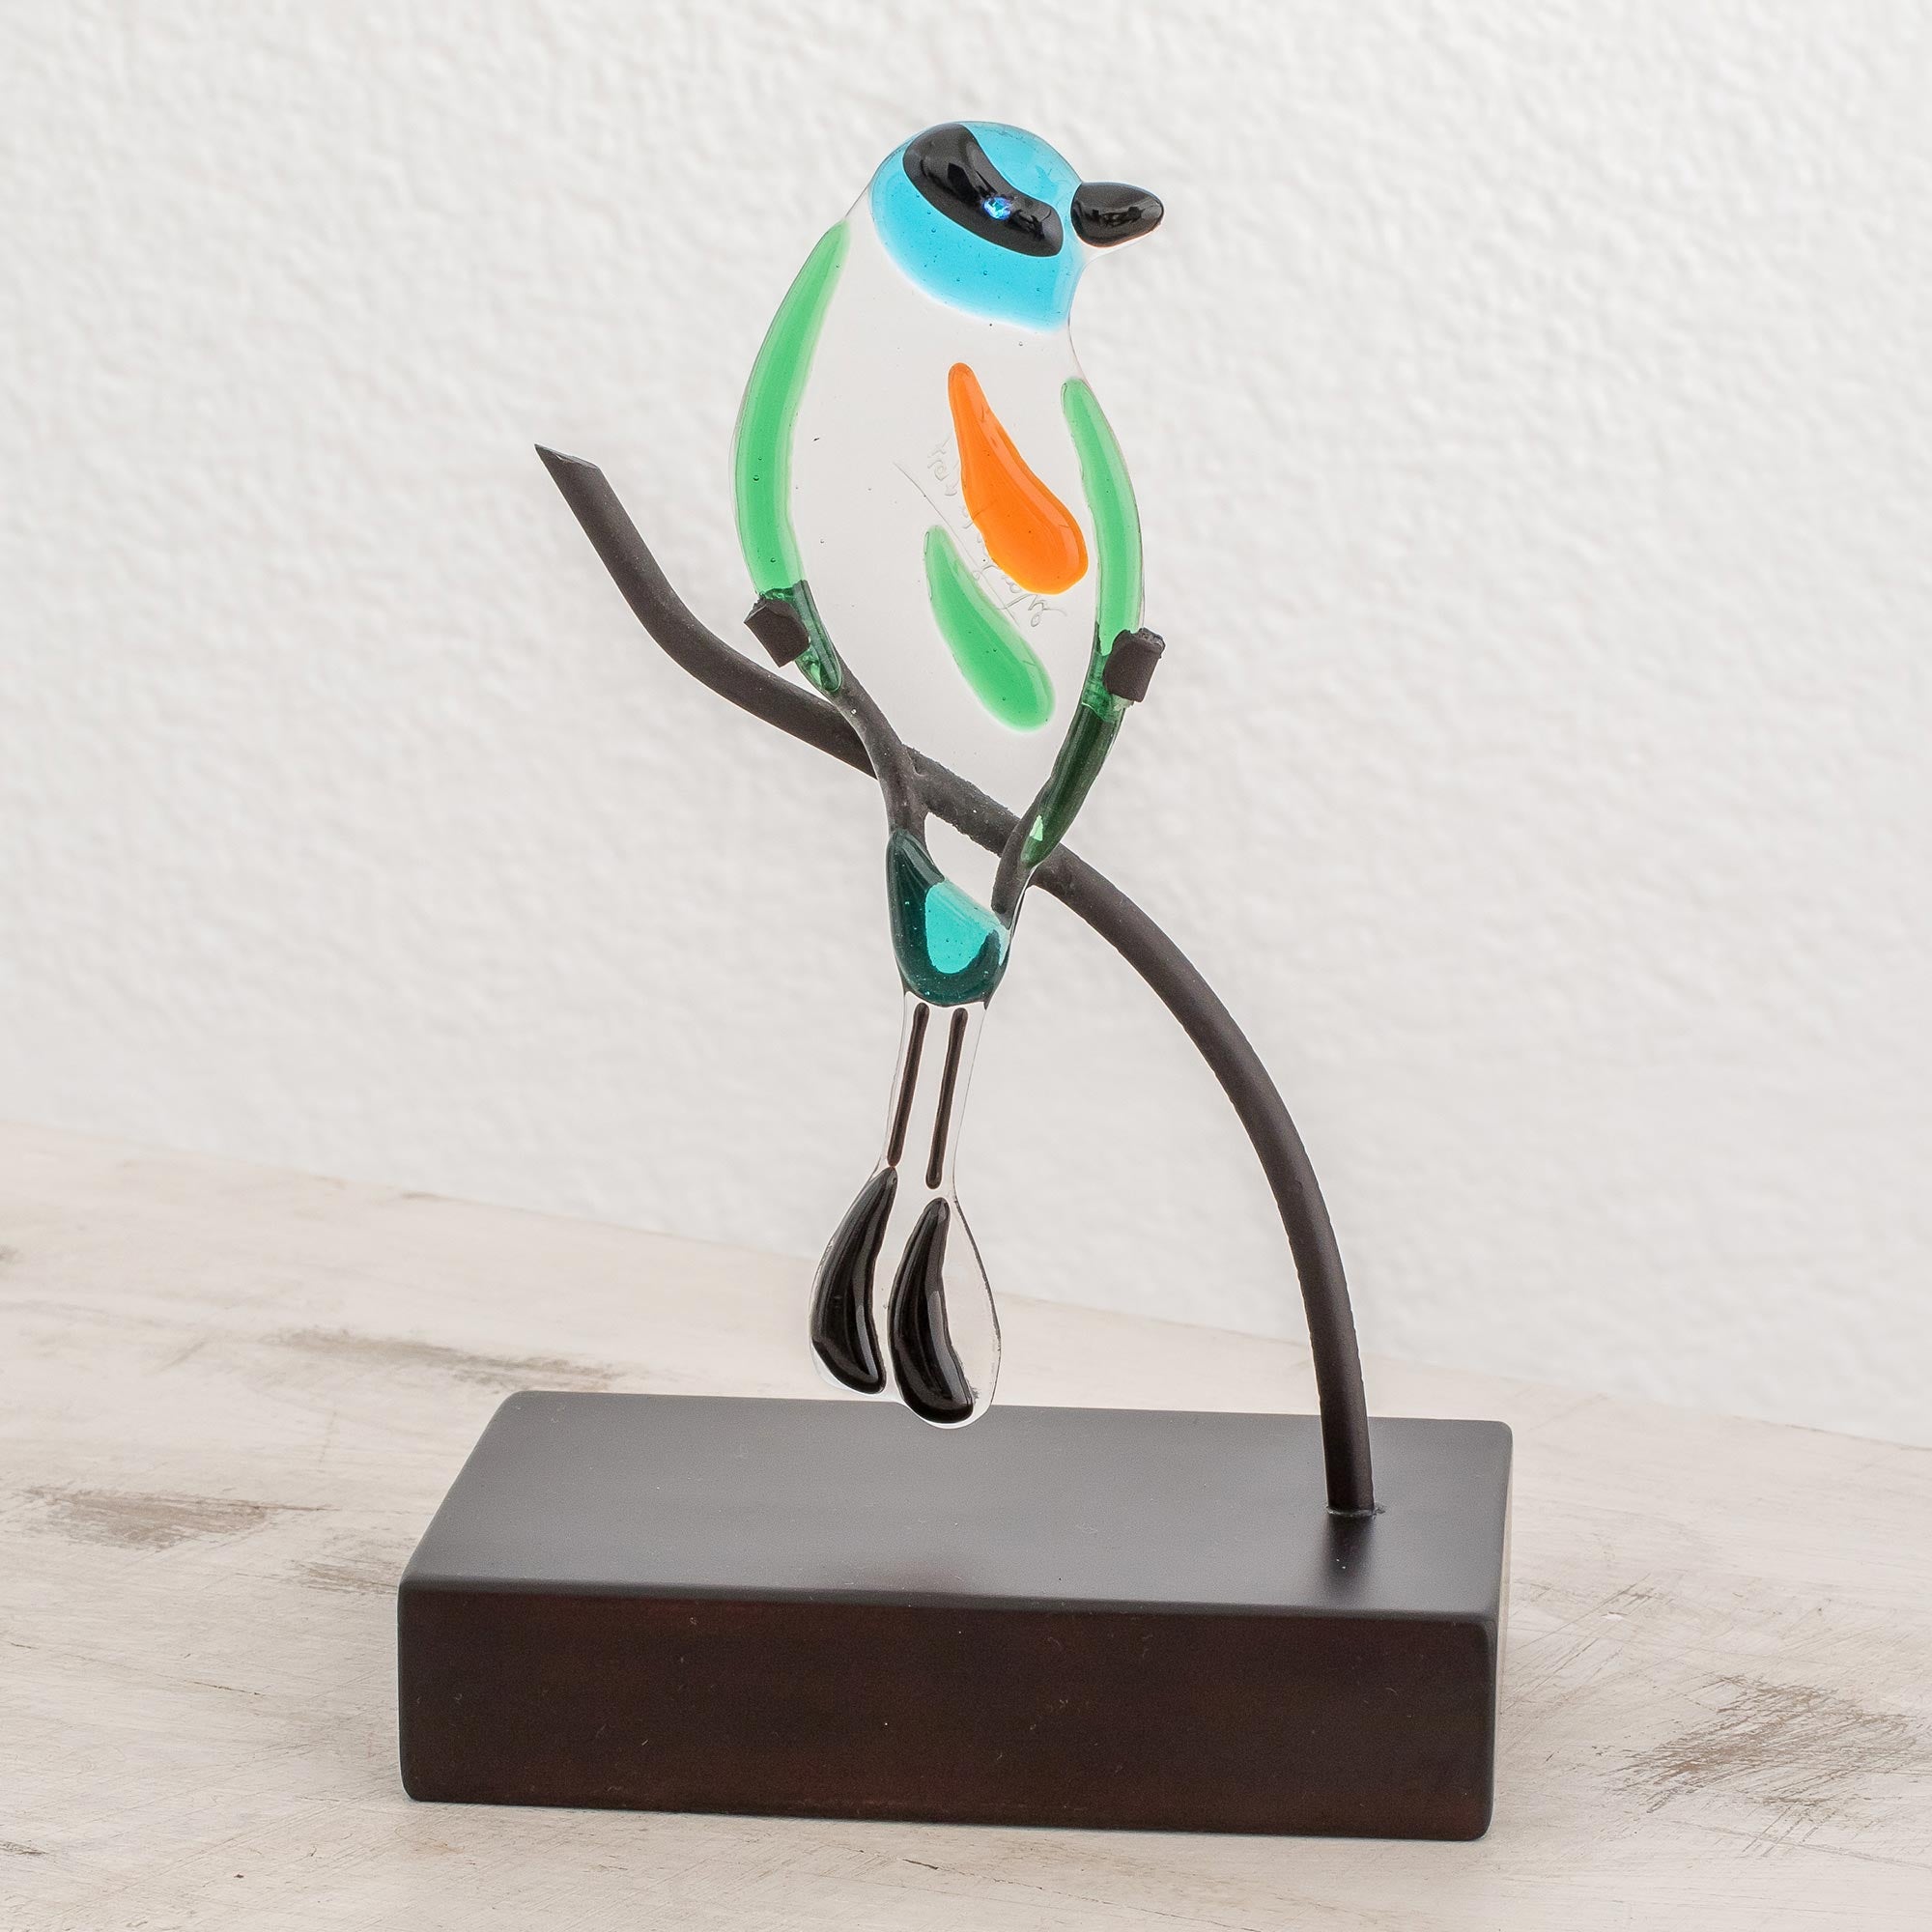 NOVICA Motmot Art Glass Sculpture Of A Motmot Bird From El Salvador